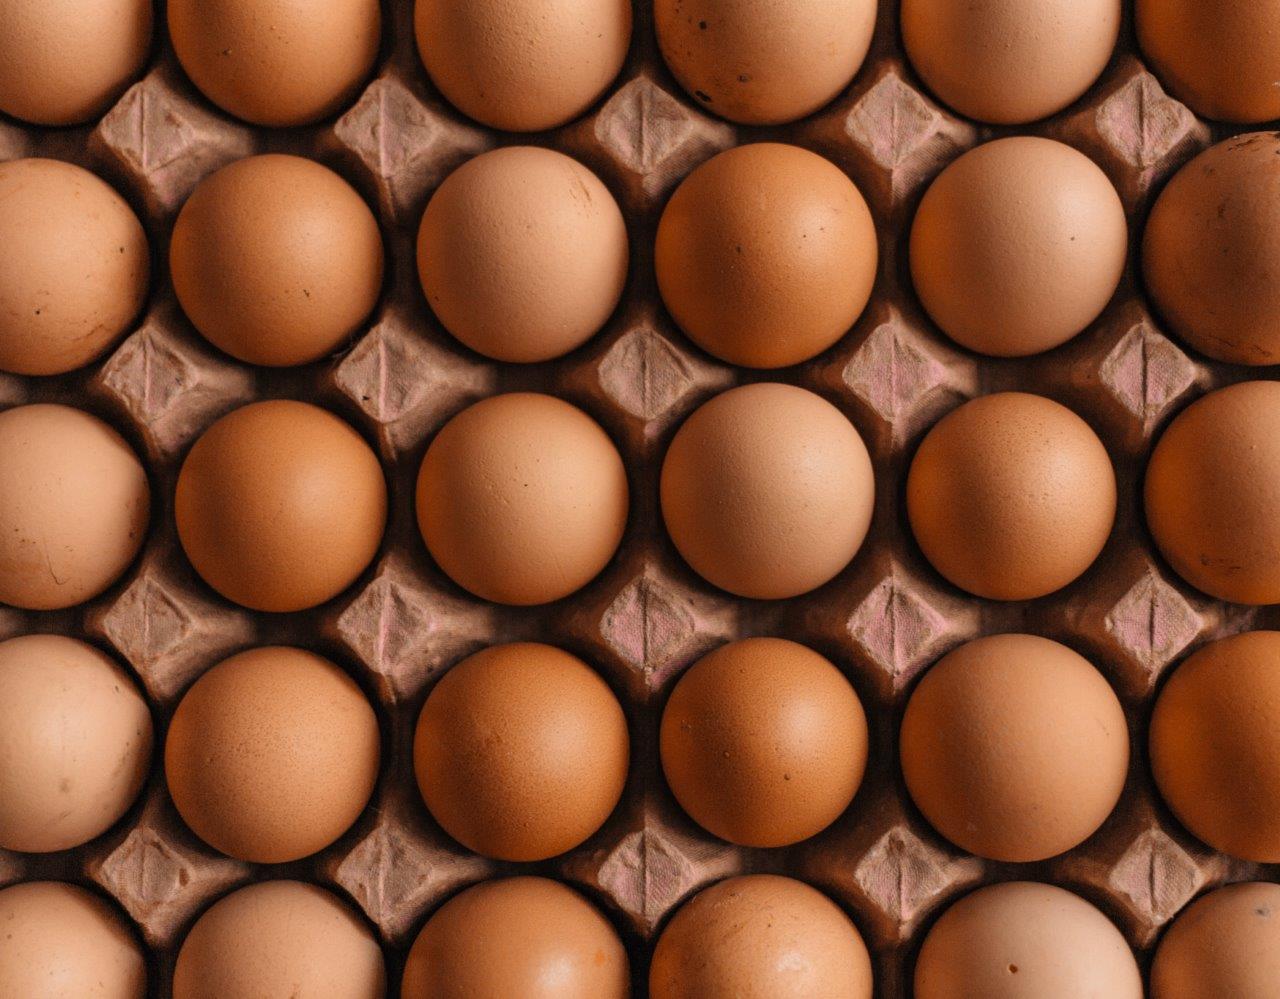 Eggs in German supermarkets